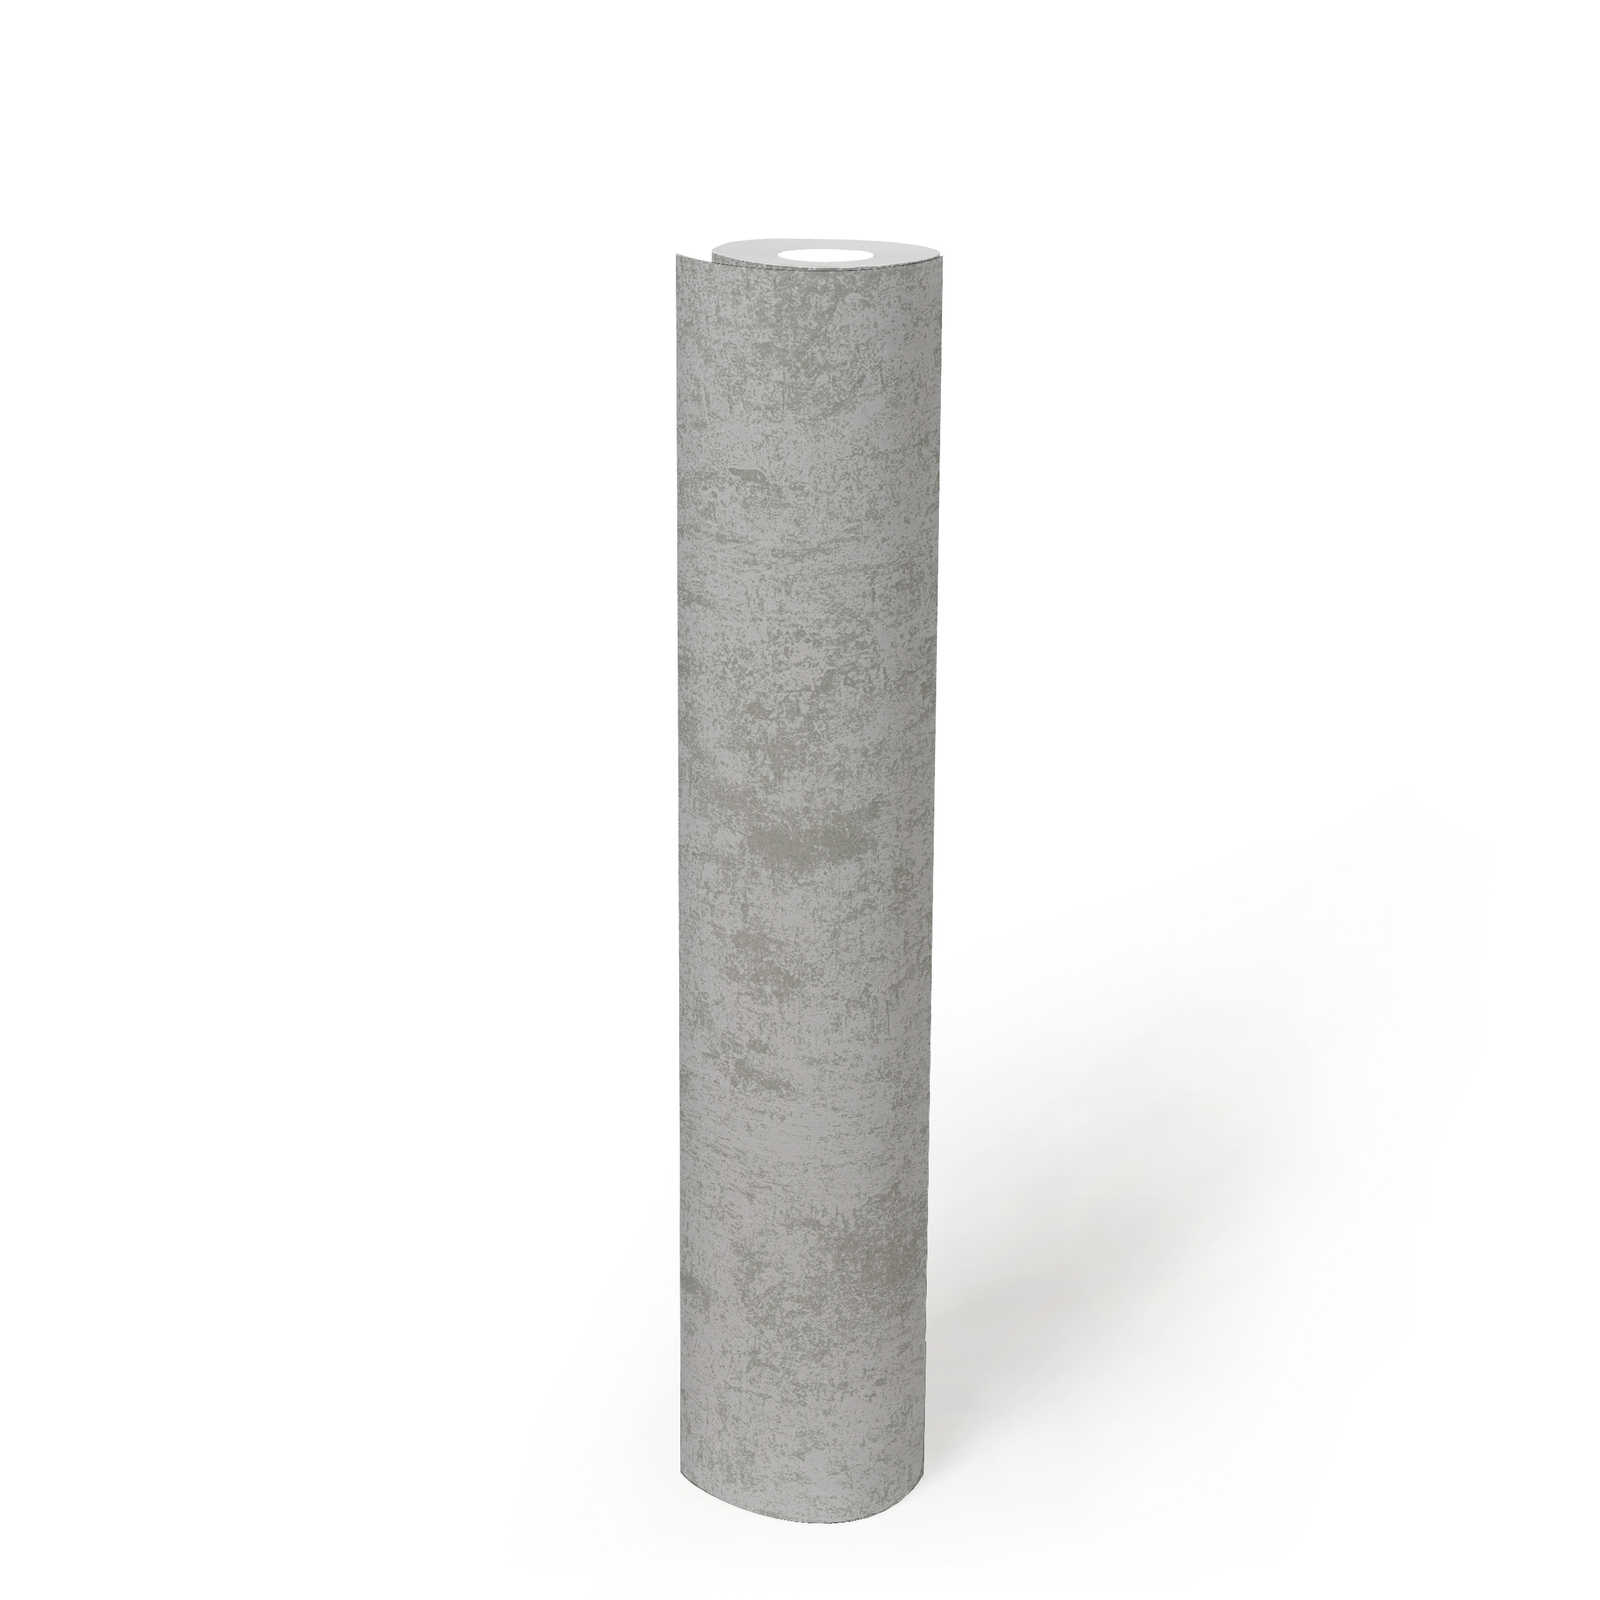             Tapete in Metalloptik glatt glänzend – Silber, Grau, Metallic
        